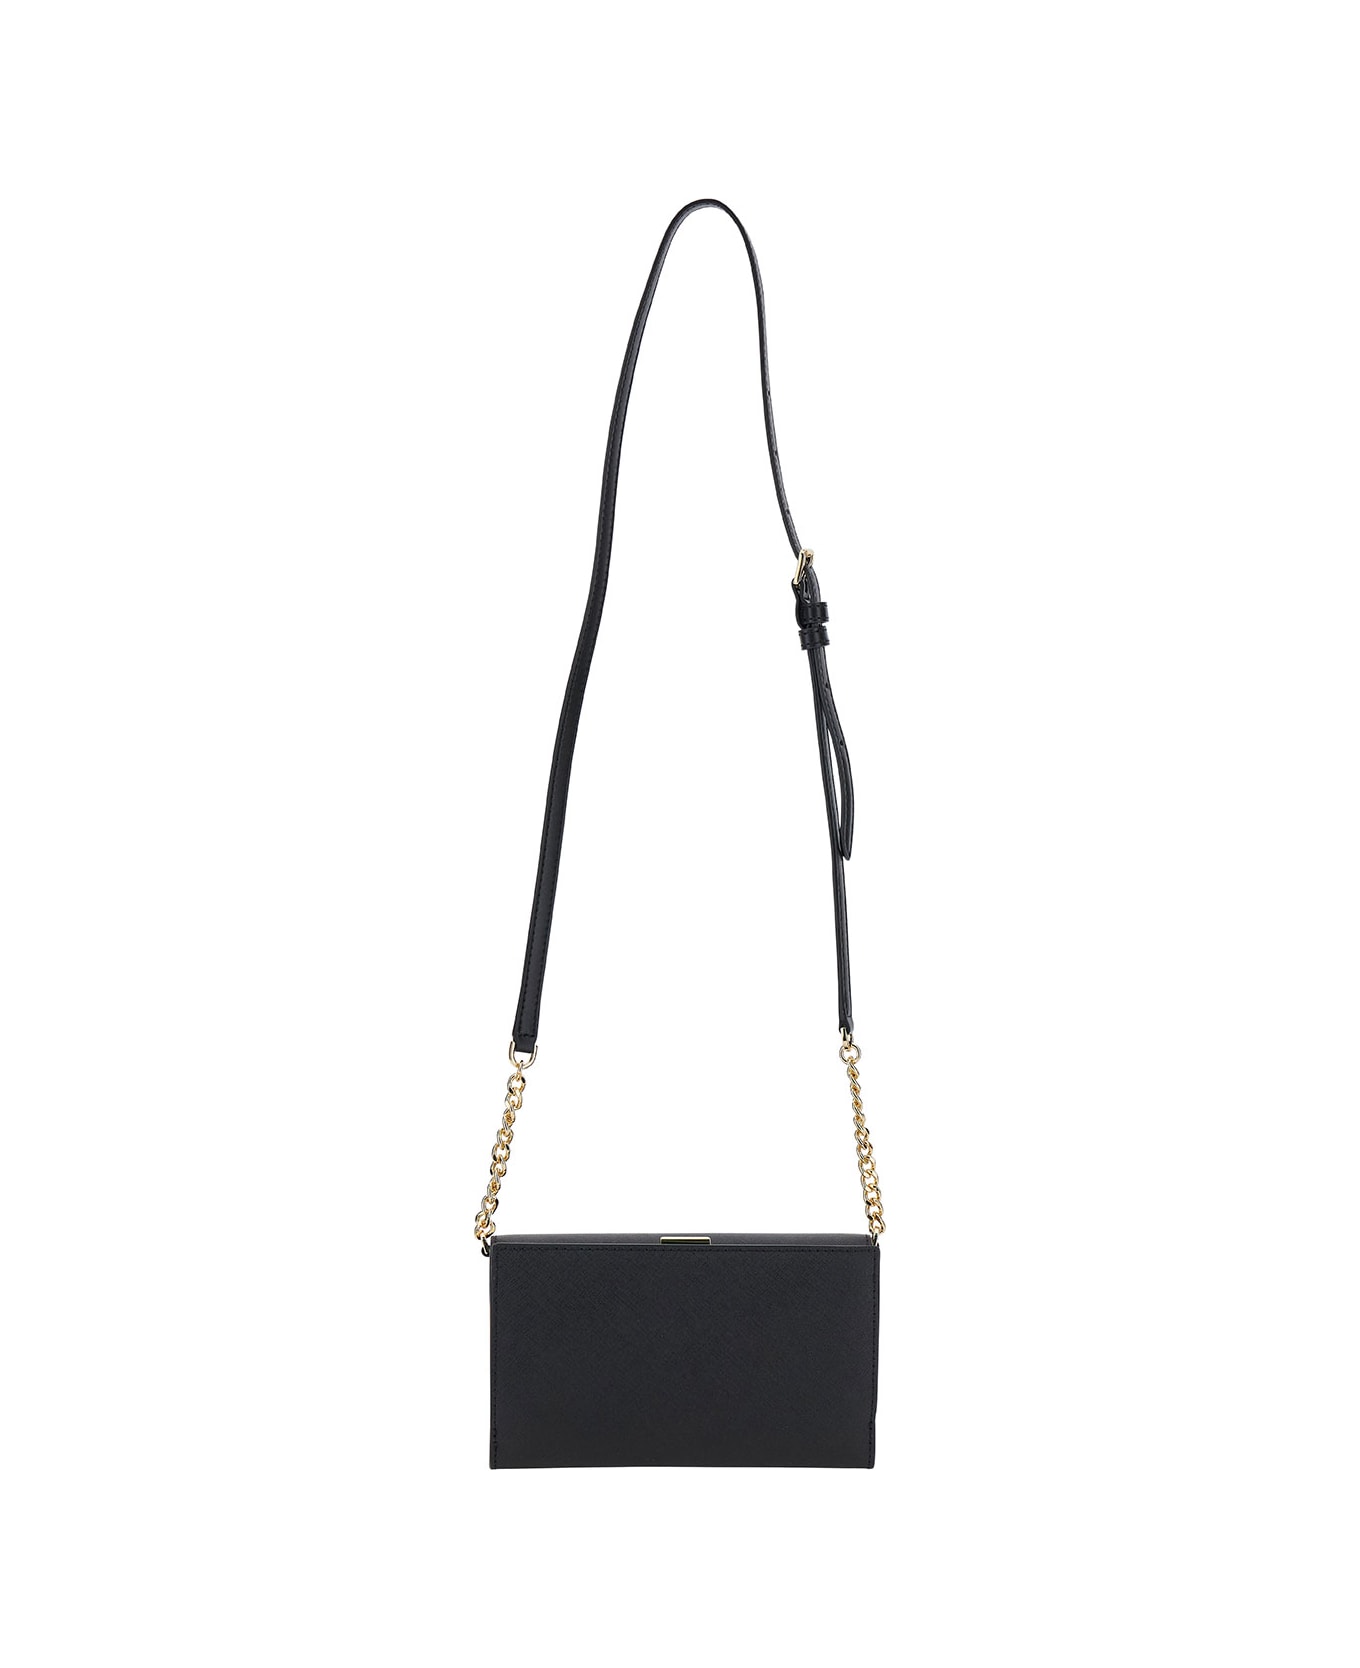 MICHAEL Michael Kors Black Shoulder Bag With Logo Detail In Leather Woman - Black ショルダーバッグ